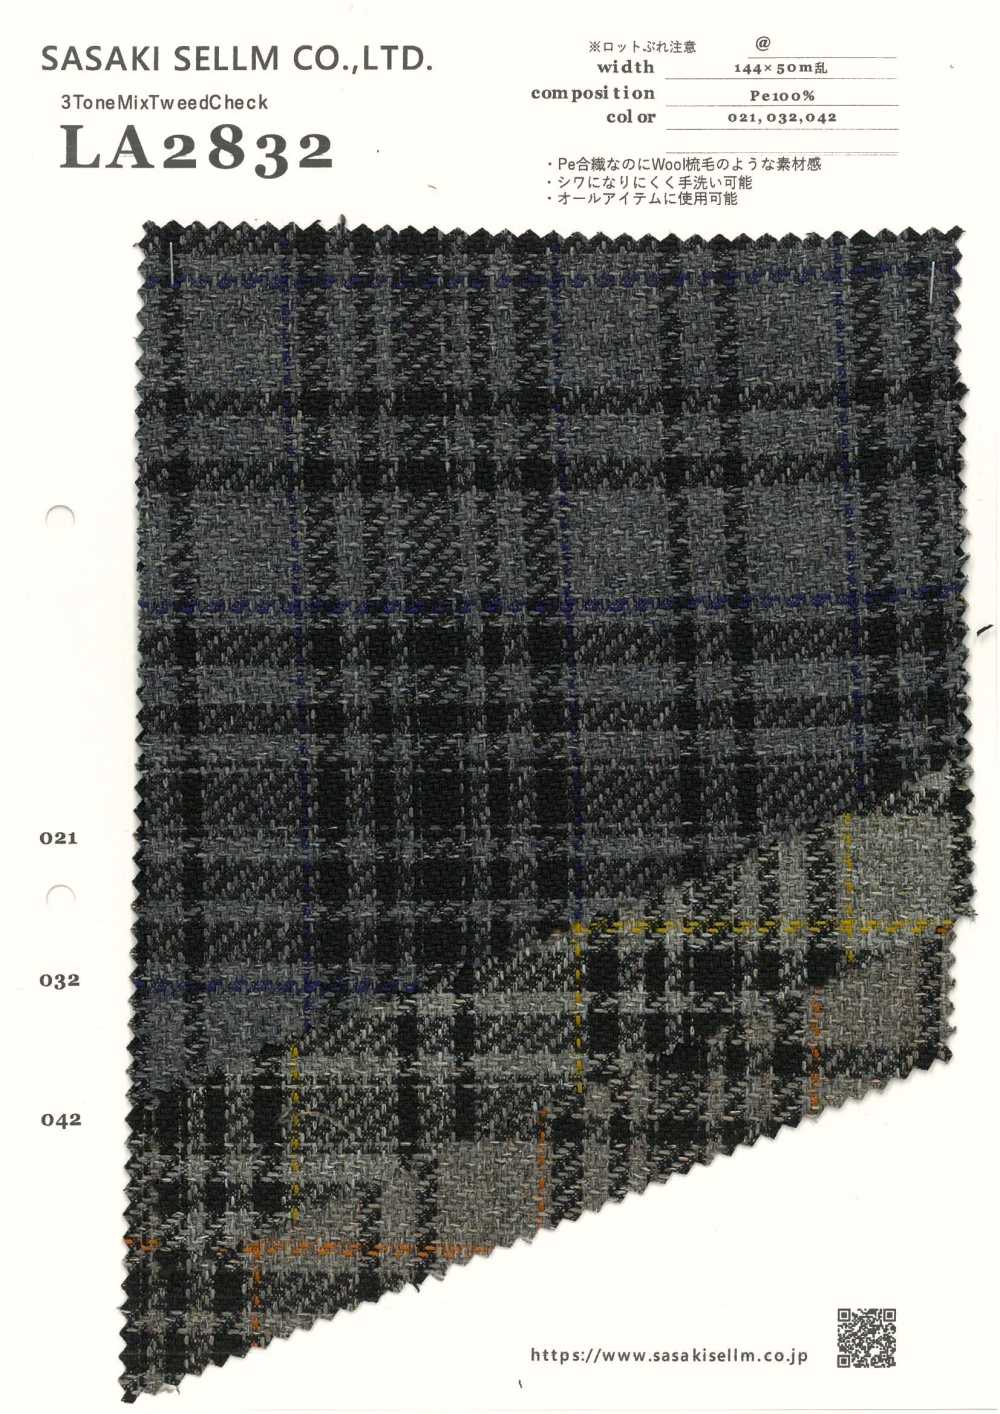 LA2832 3ToneMix Tweed Check[Textile / Fabric] SASAKISELLM